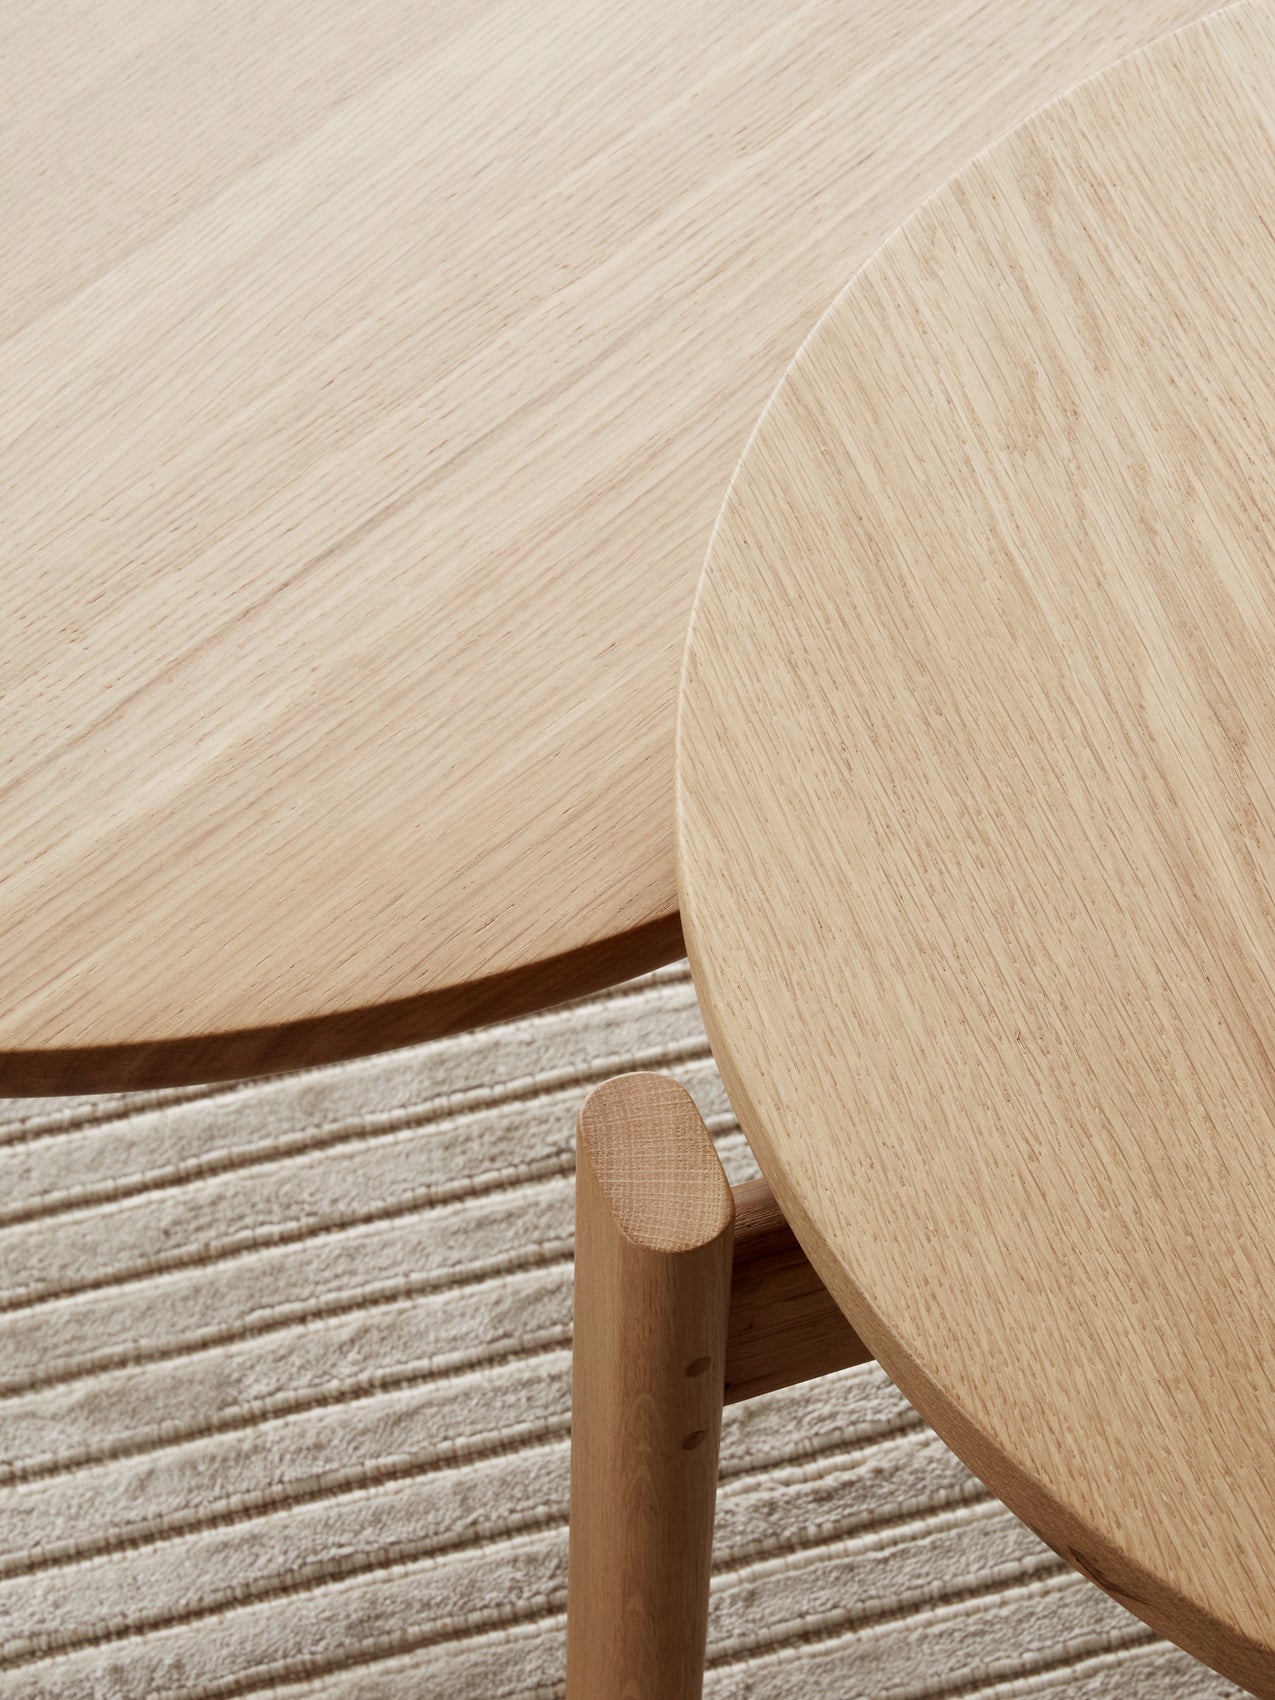 Passage Lounge Table-Side Table-Afteroom Studio-menu-minimalist-modern-danish-design-home-decor